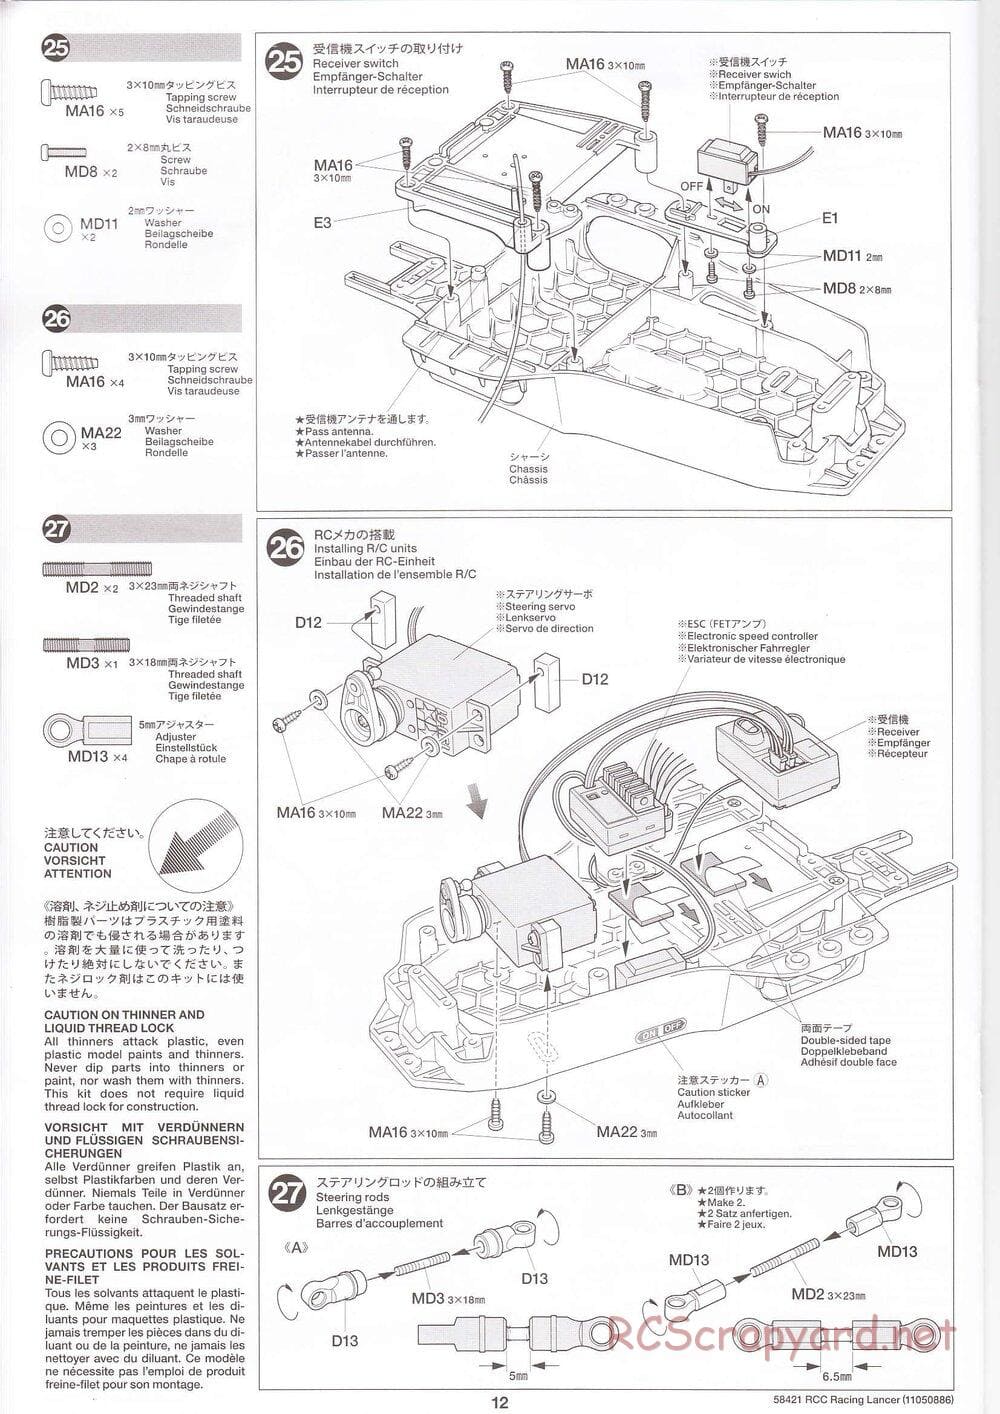 Tamiya - Mitsubishi Racing Lancer - DF-01 Chassis - Manual - Page 12